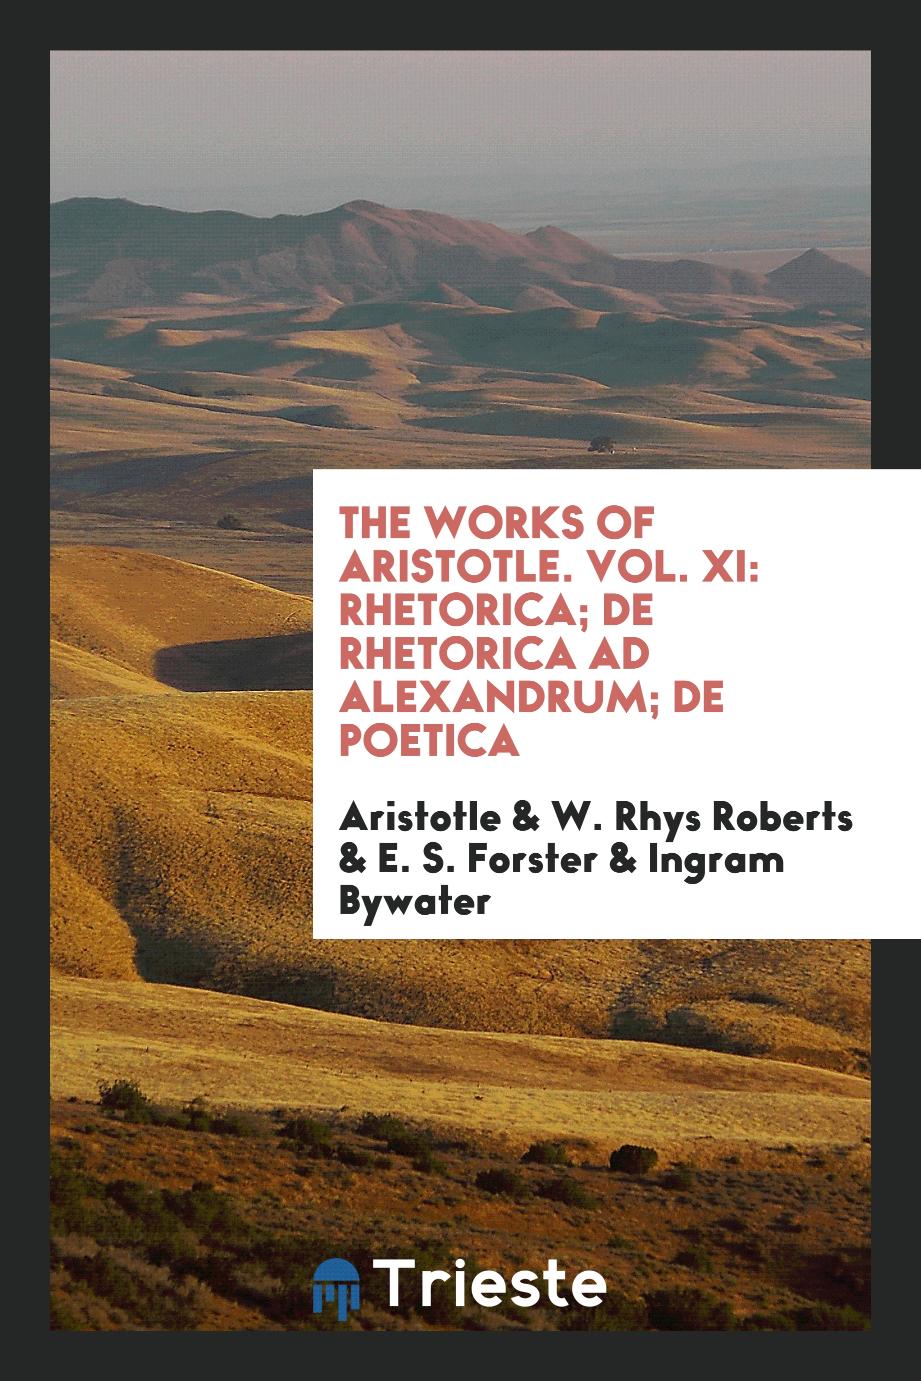 The Works of Aristotle. Vol. XI: Rhetorica; De Rhetorica ad Alexandrum; De Poetica